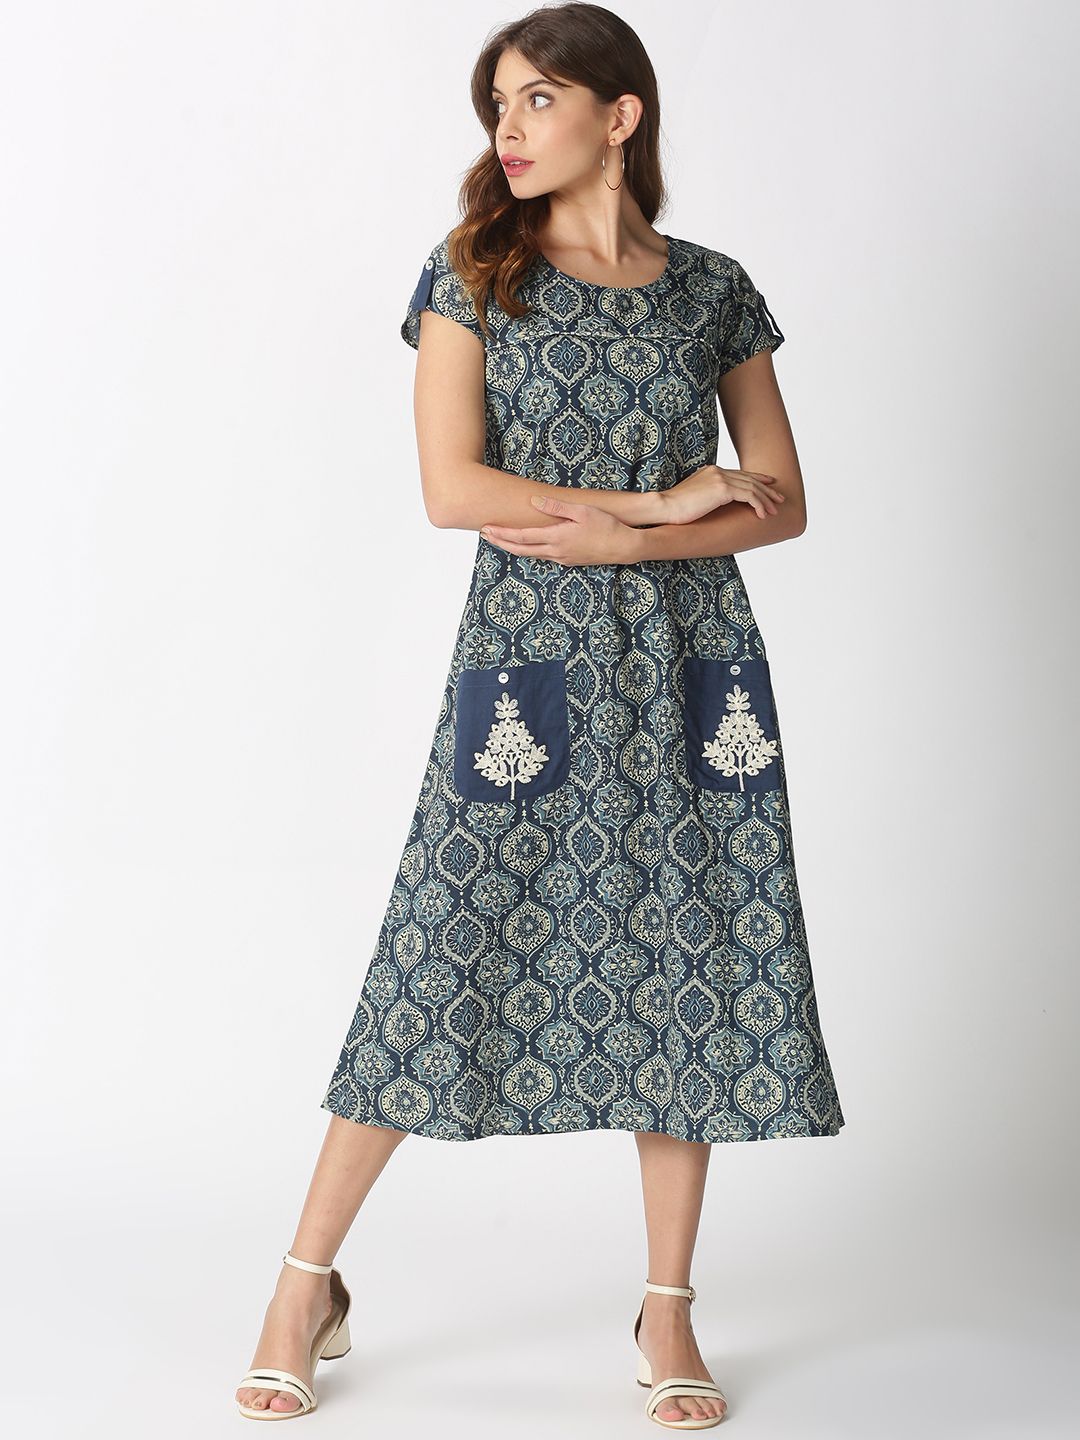 Saffron Threads Women Blue Ethnic Motifs Printed Cotton A-Line Midi Dress Price in India